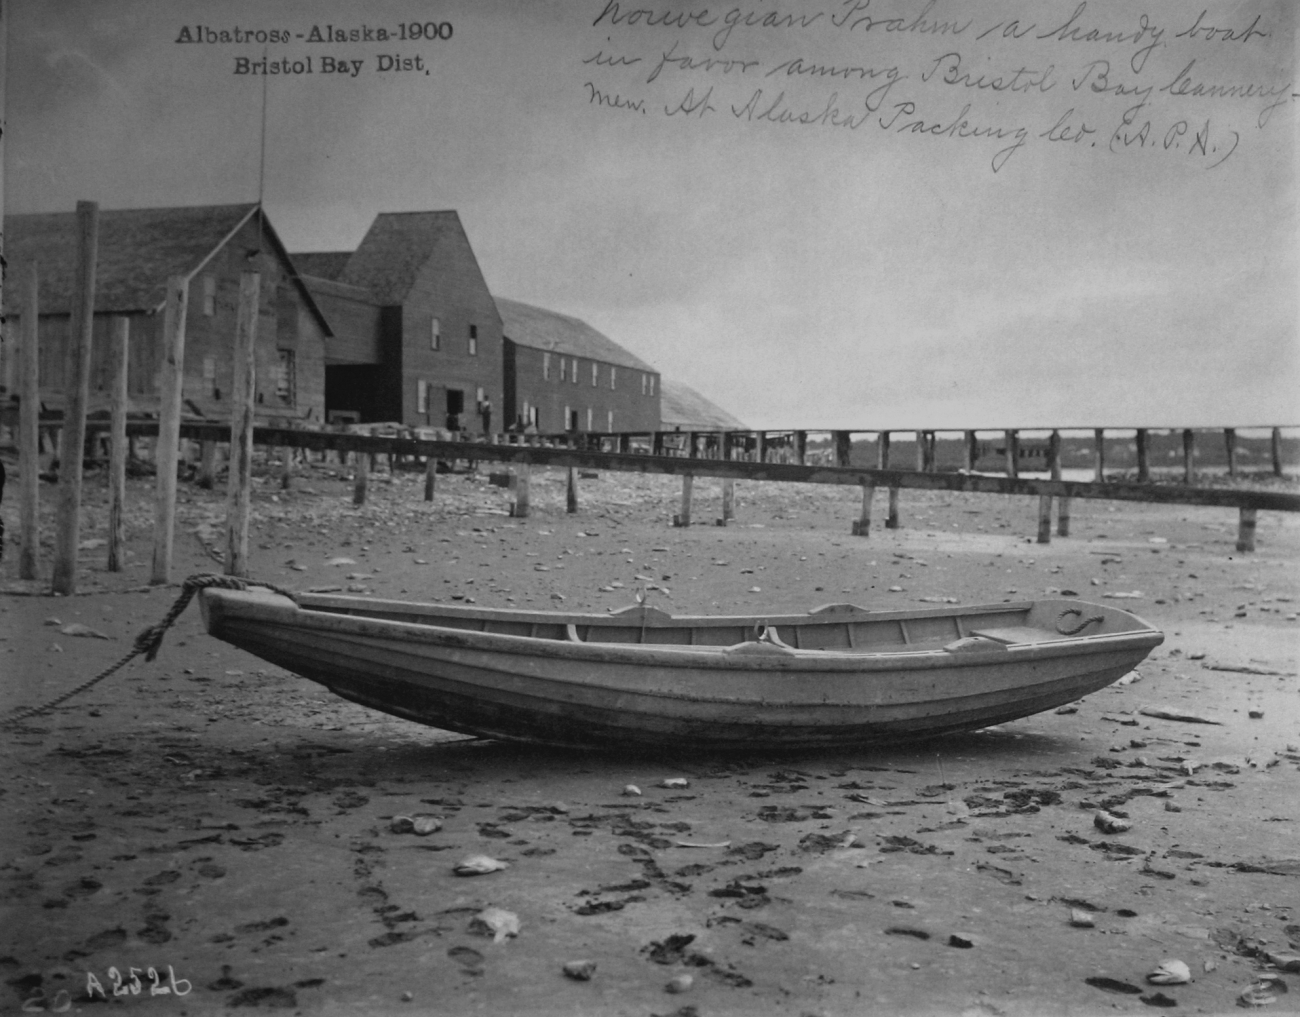 Albatross, AK, 1900, Bristol Bay district, Norwegian prahm, a handy boat infavor among Bristol Bay cannery at Alaska Packing Co